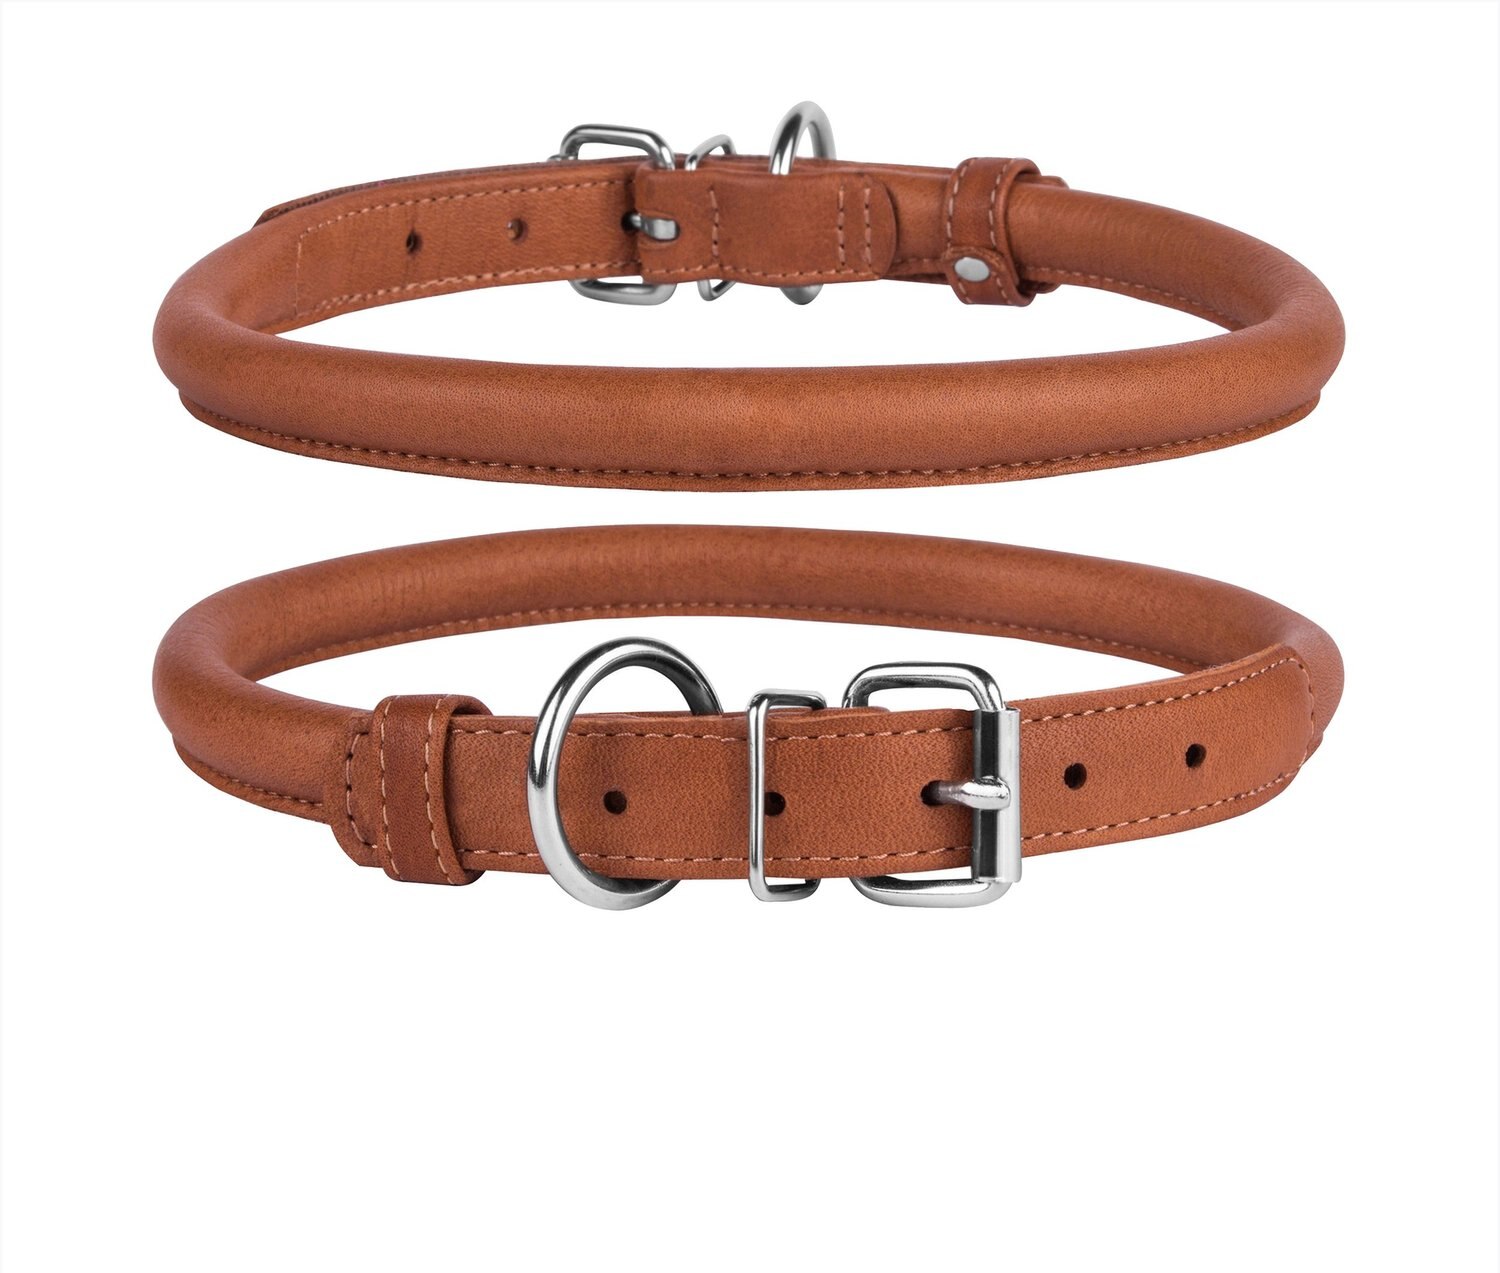 CollarDirect Rolled Leather Dog Collar